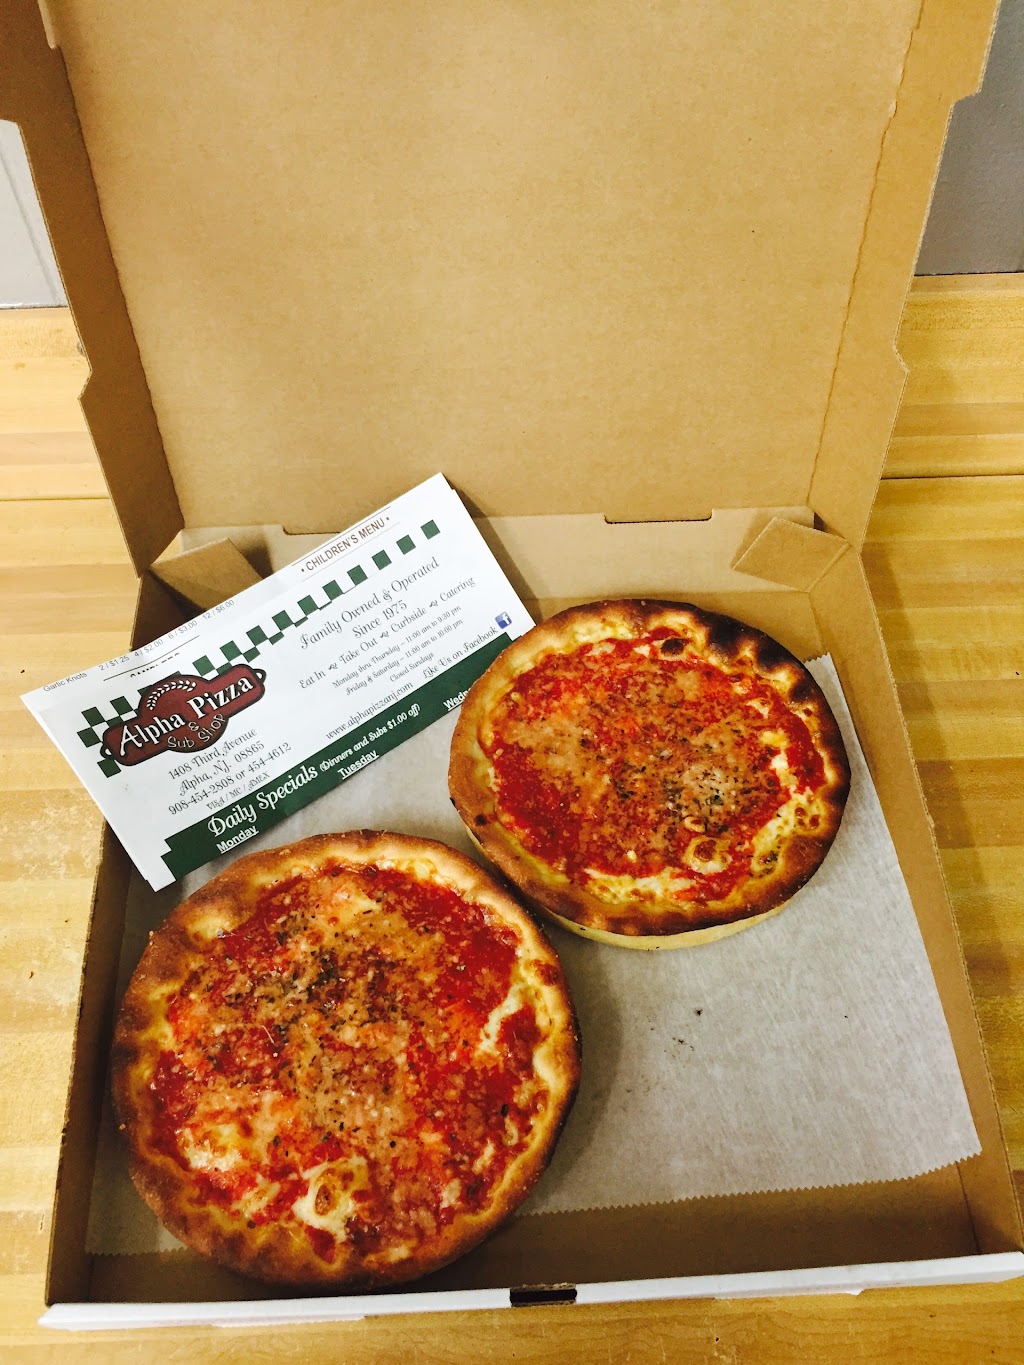 Alpha Pizza & Sub Shop | 1408 3rd Ave, Phillipsburg, NJ 08865 | Phone: (908) 454-2808